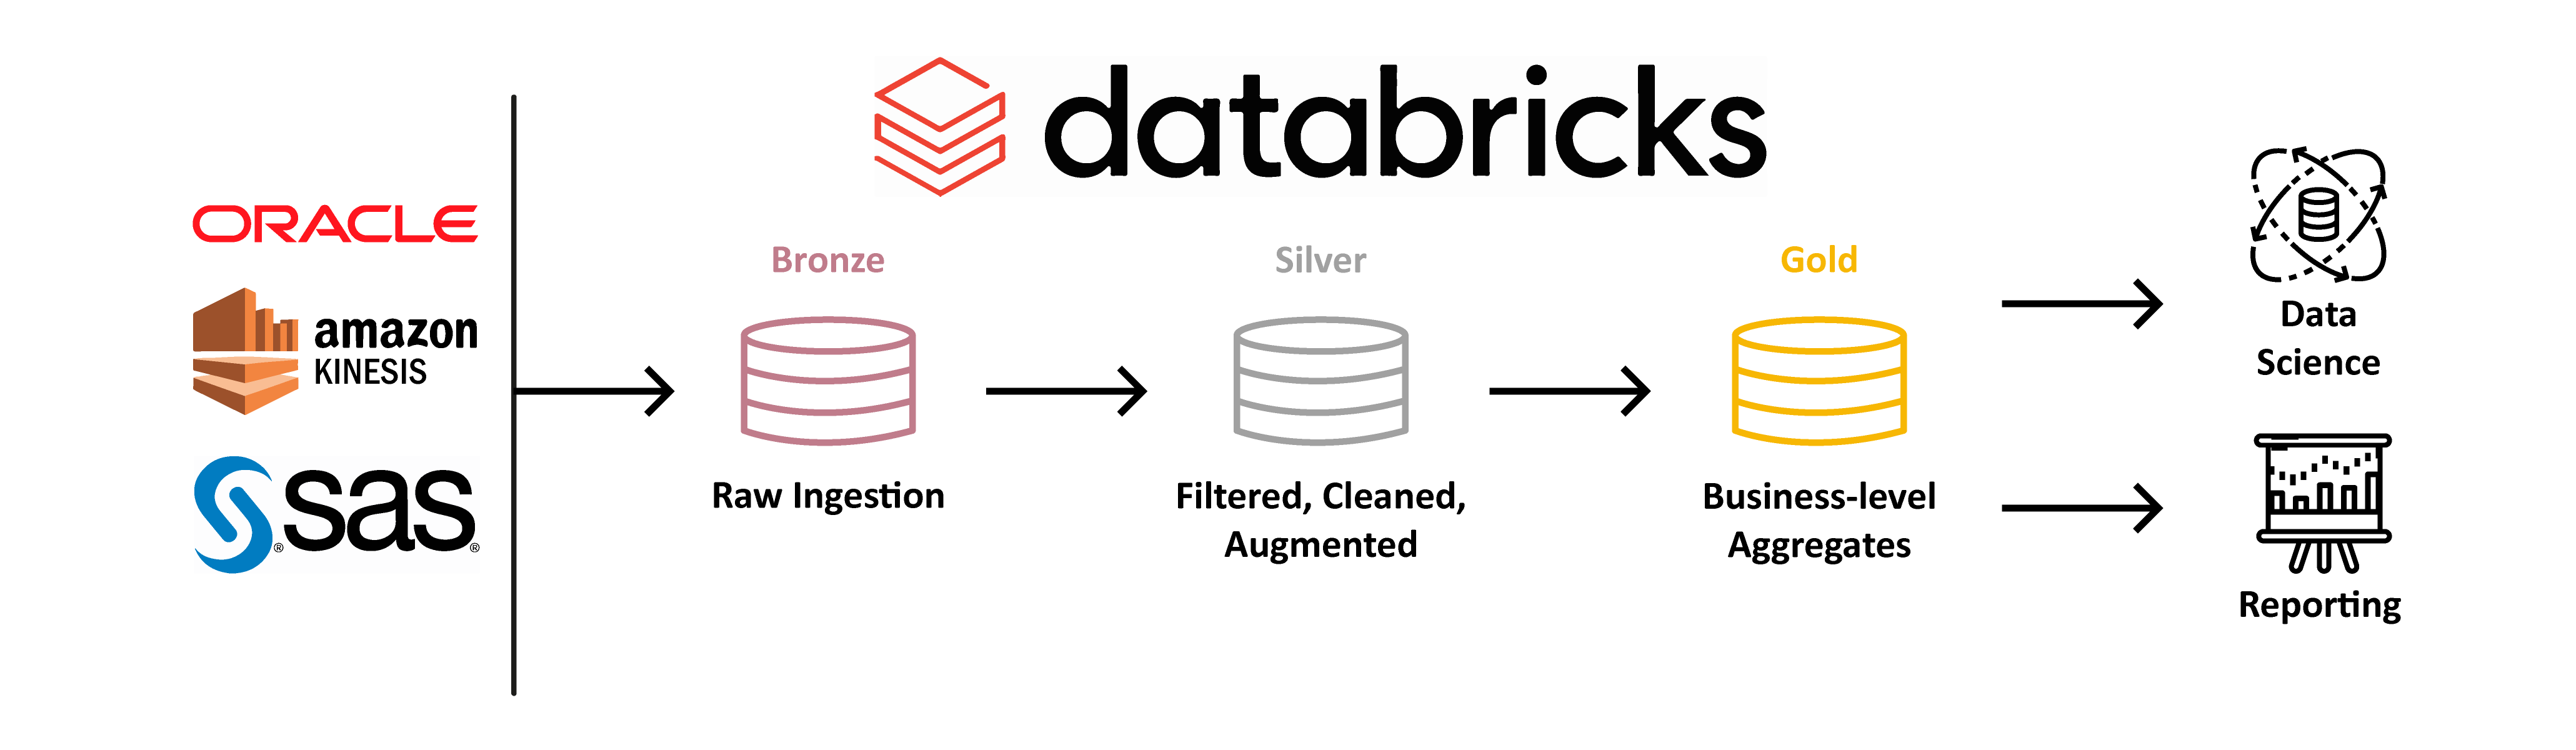 databricks cloud platform scheme